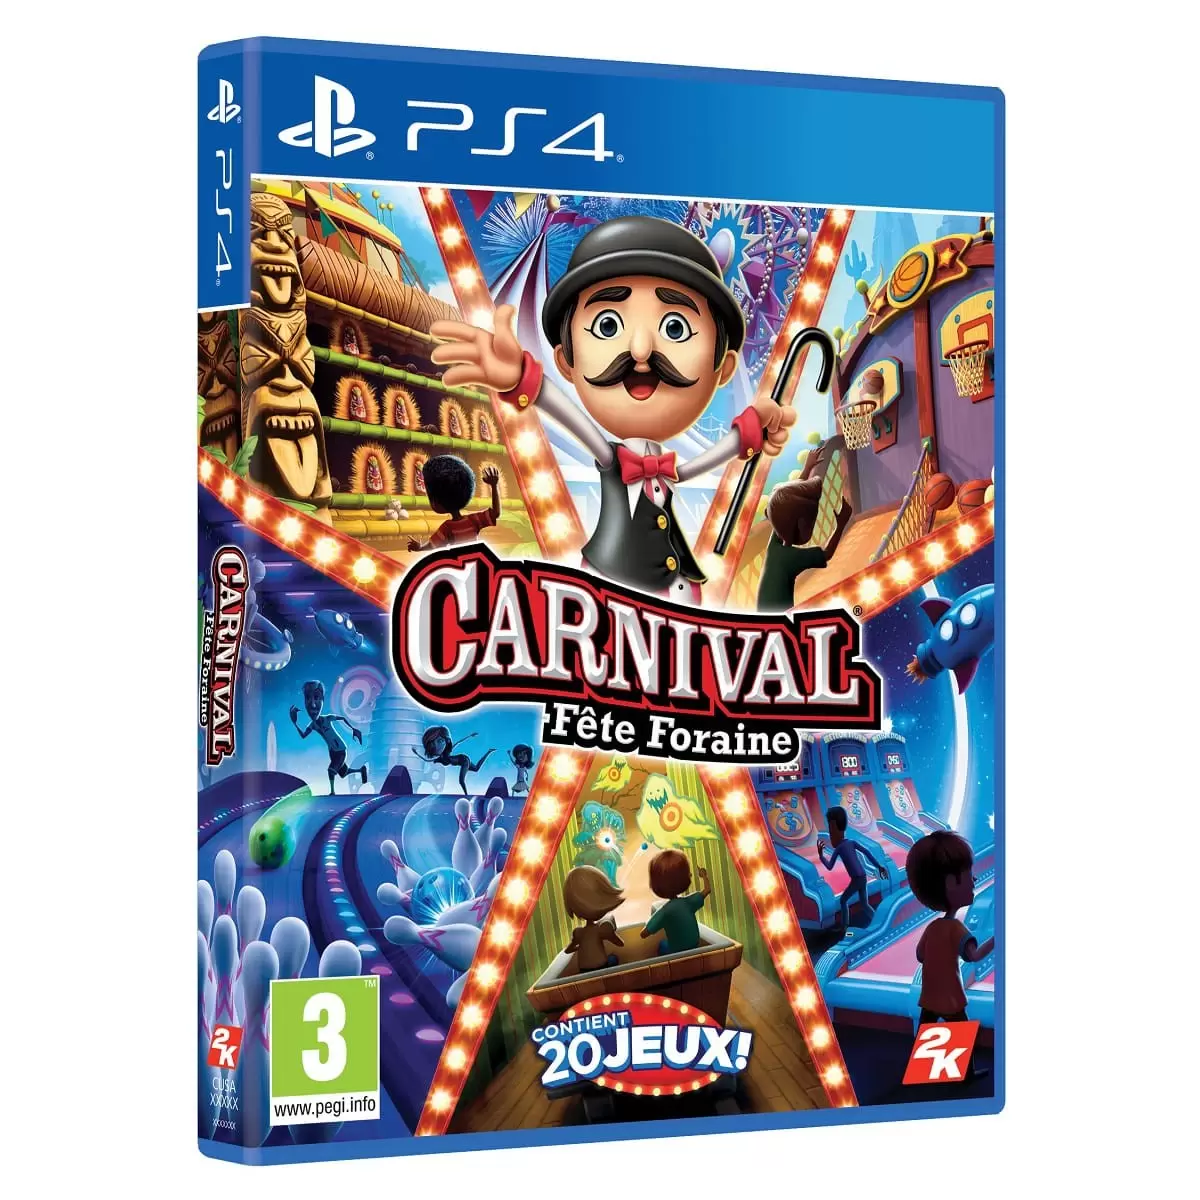 PS4 Games - Carnival Fête Foraine